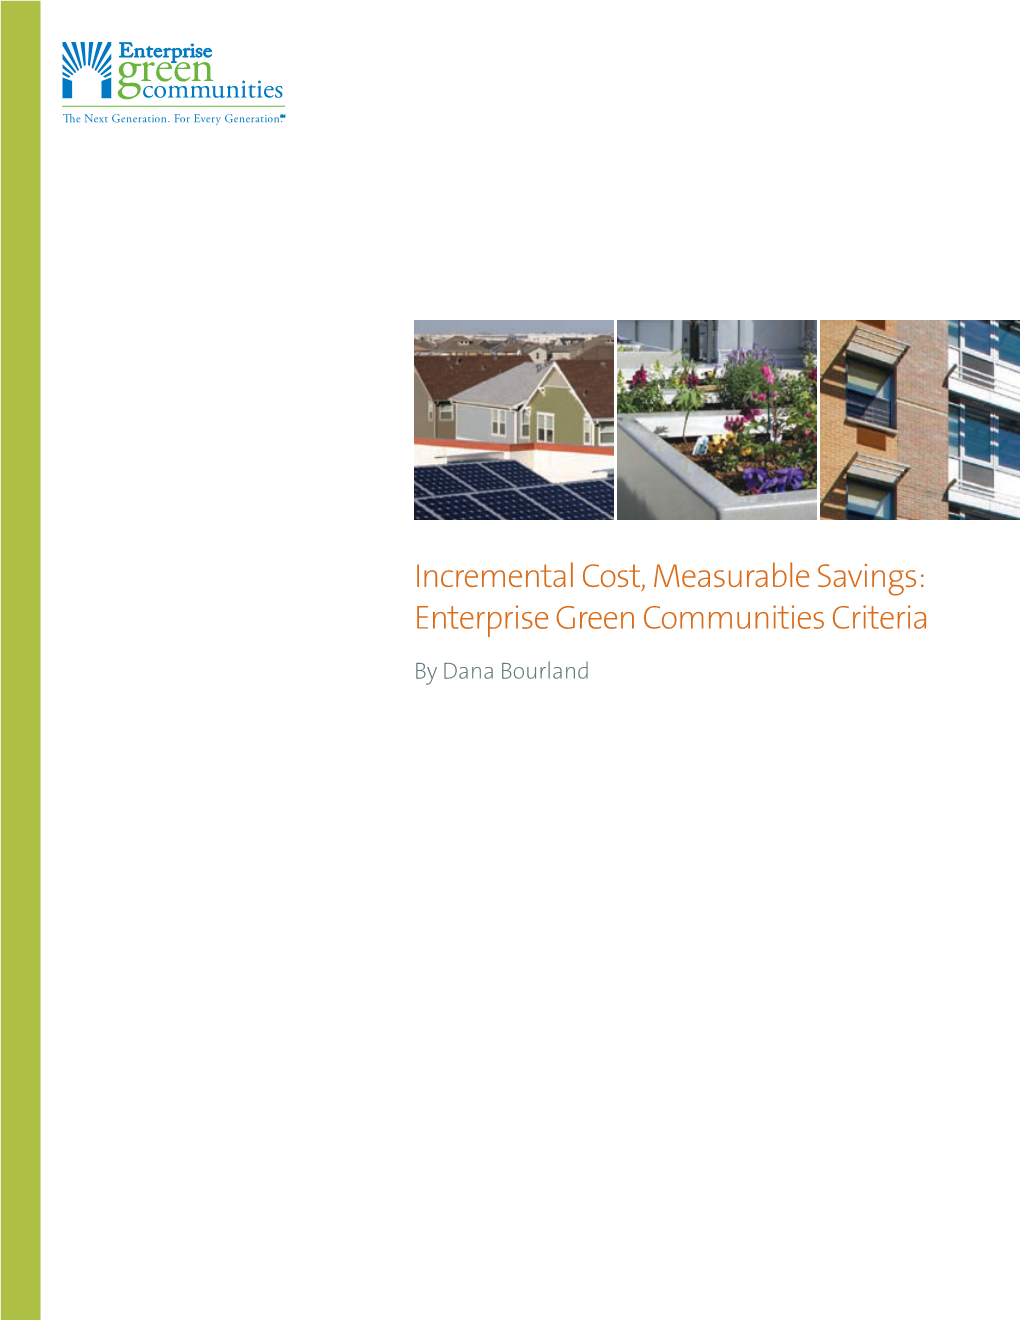 Enterprise Green Communities Criteria